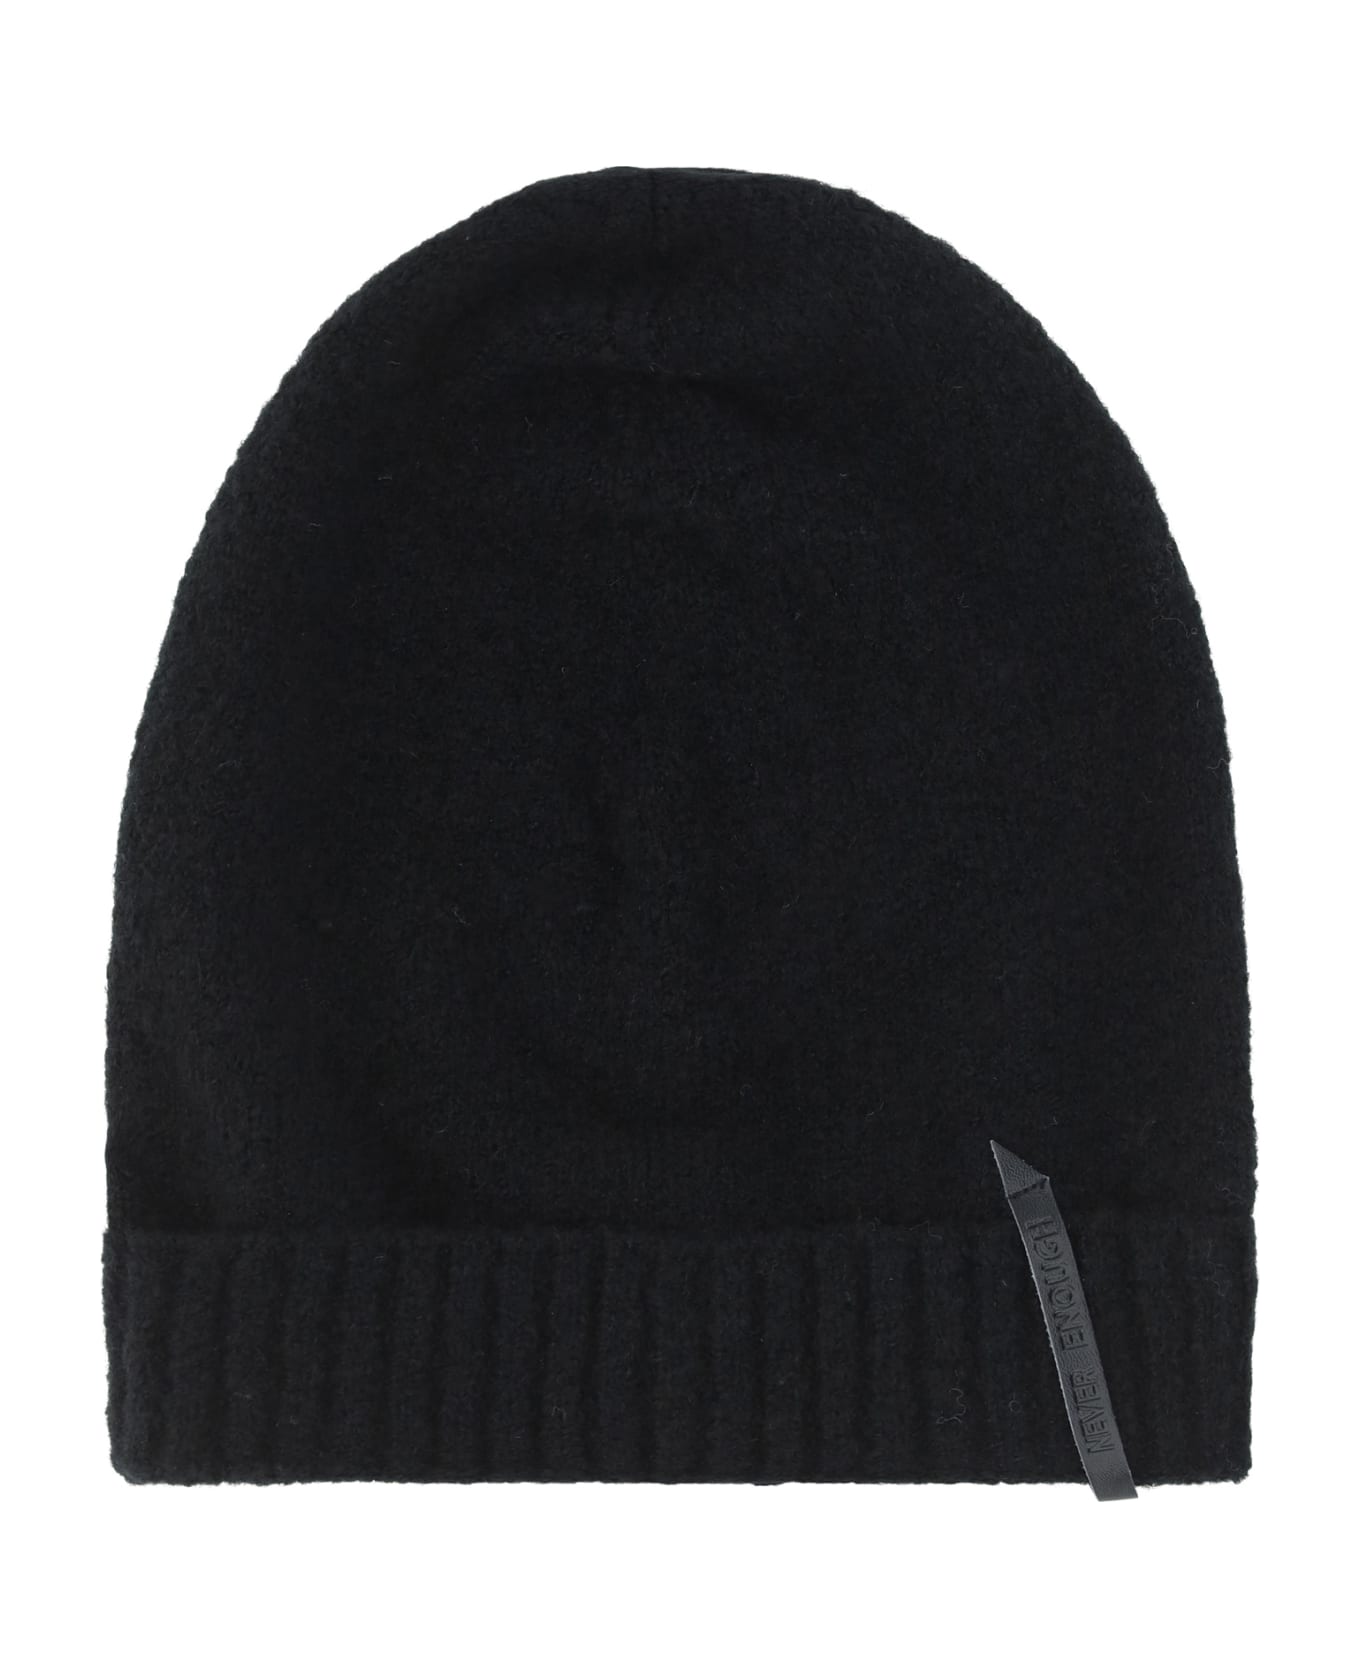 Never Enough Beanie Hat - Black